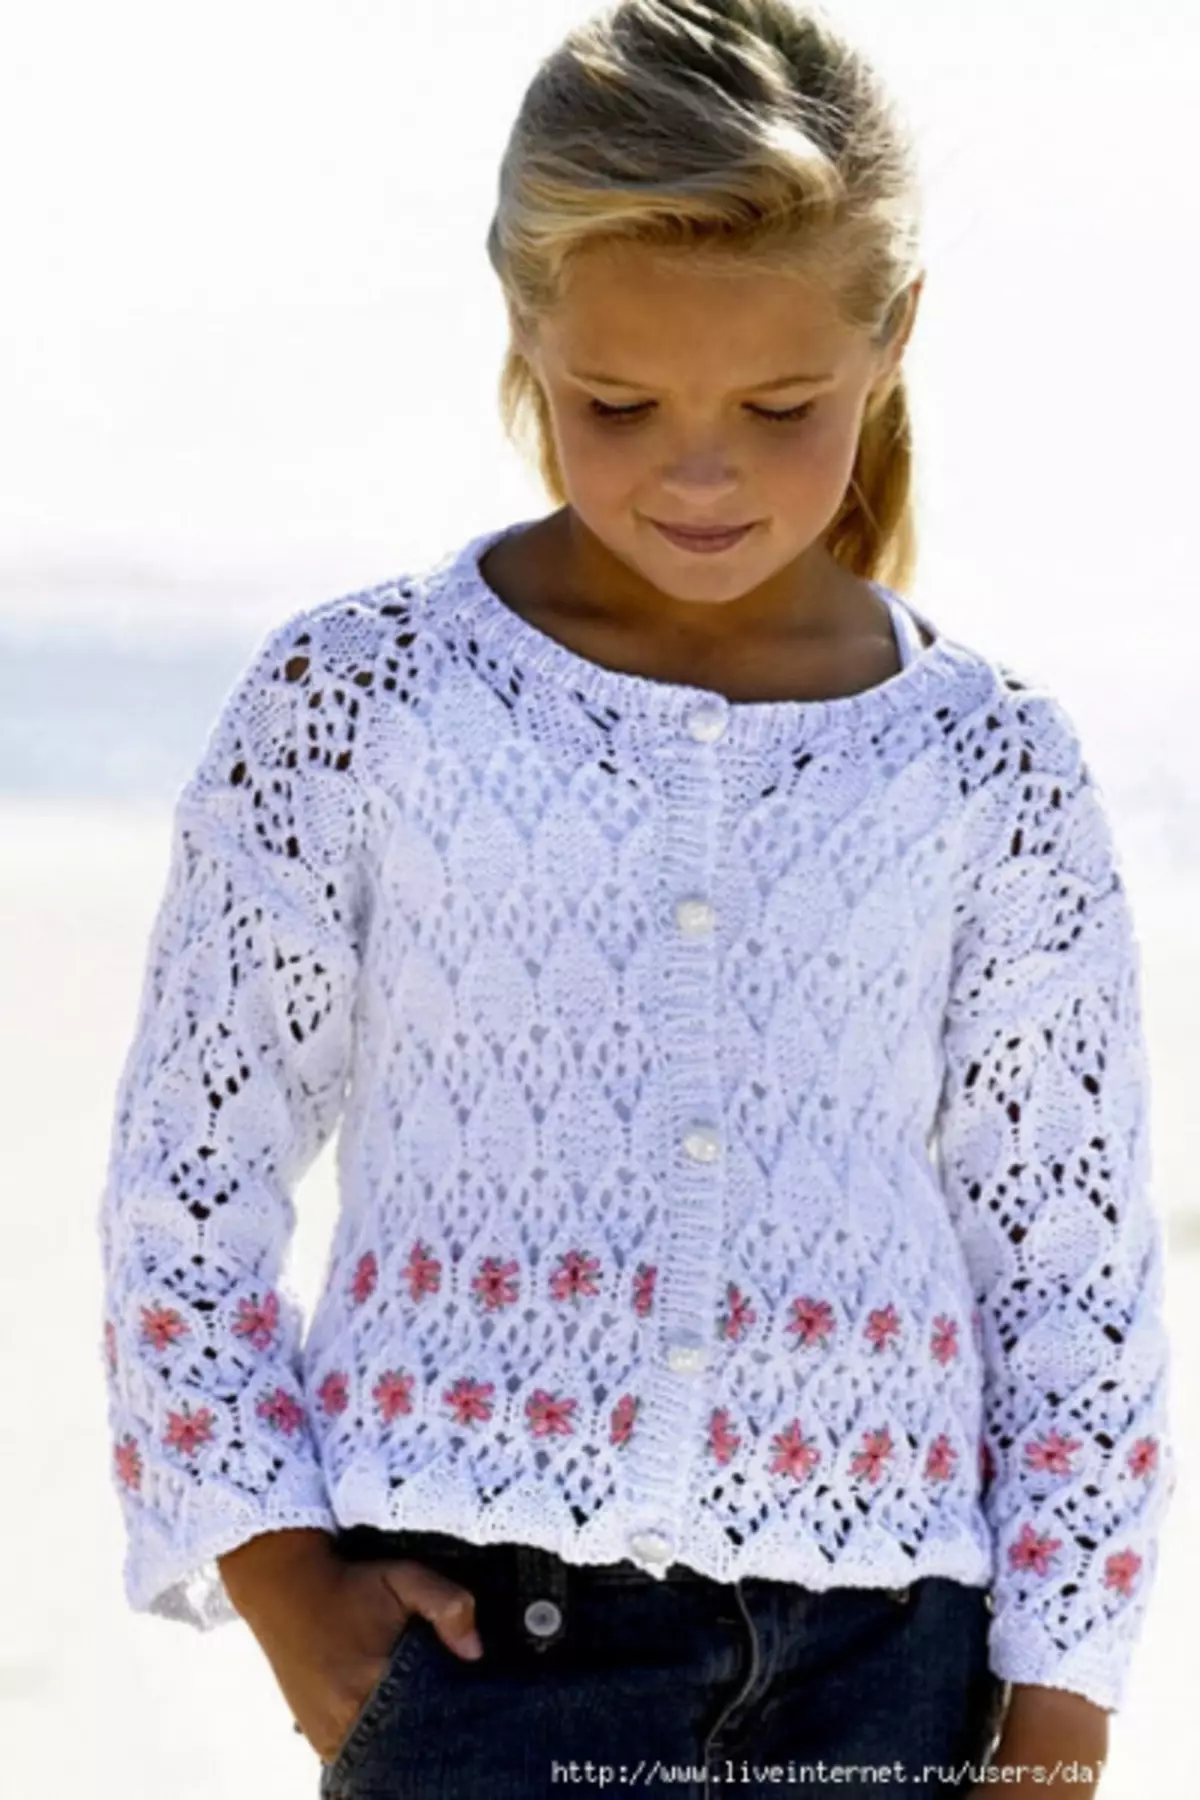 Blouse Crochet untuk seorang gadis: skim capes hangat rajutan, belajar untuk membuat baju baju terbuka dalam foto dan video